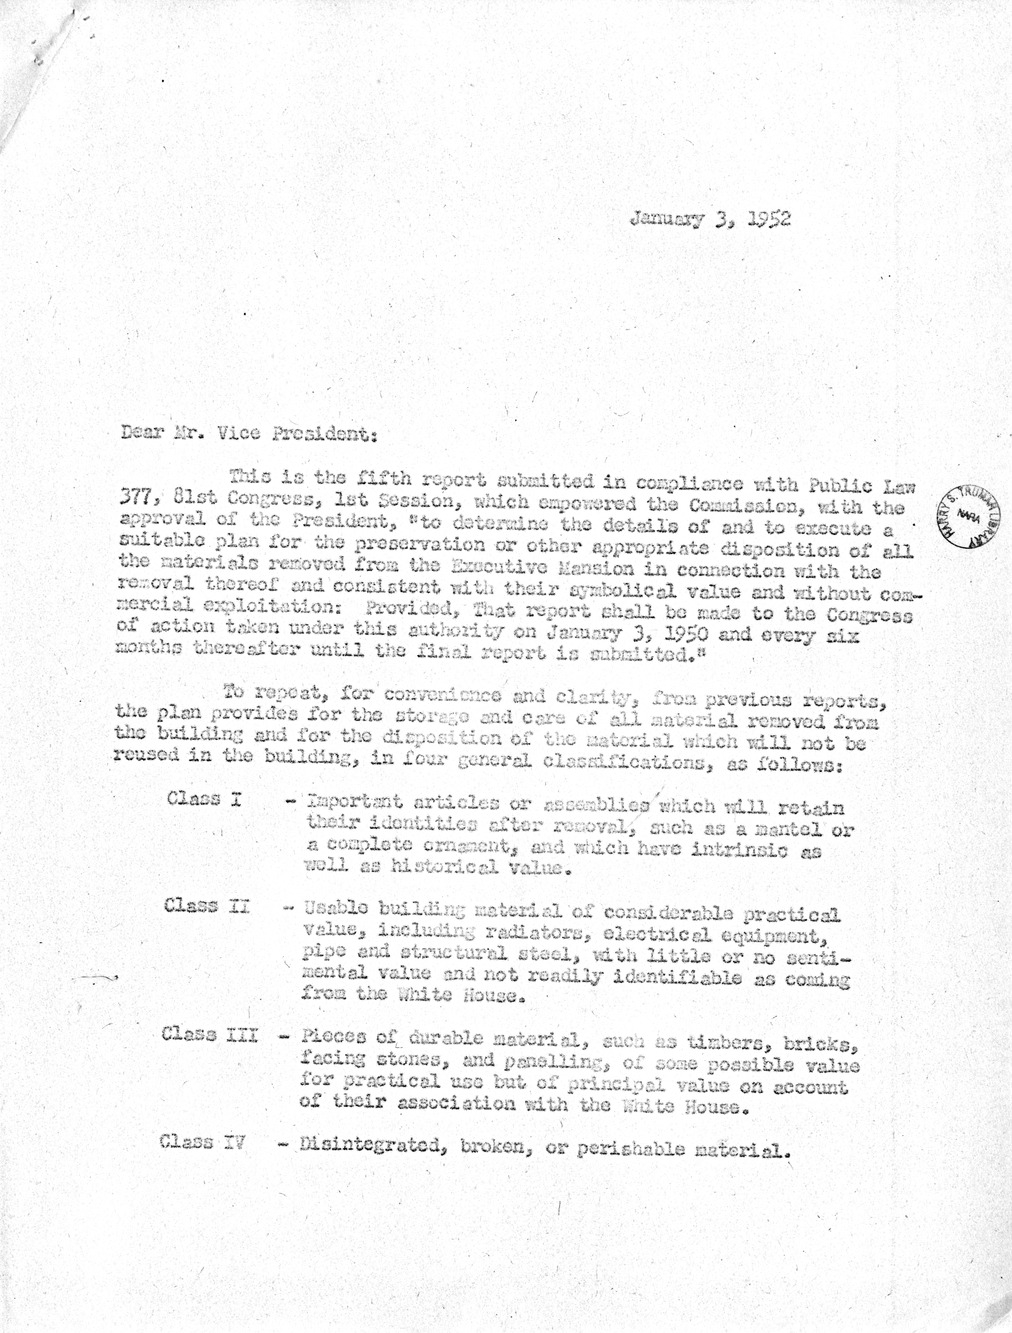 Memorandum from Major General Glen E. Edgerton to Mr. Matthew J. Connelly, with Attachment